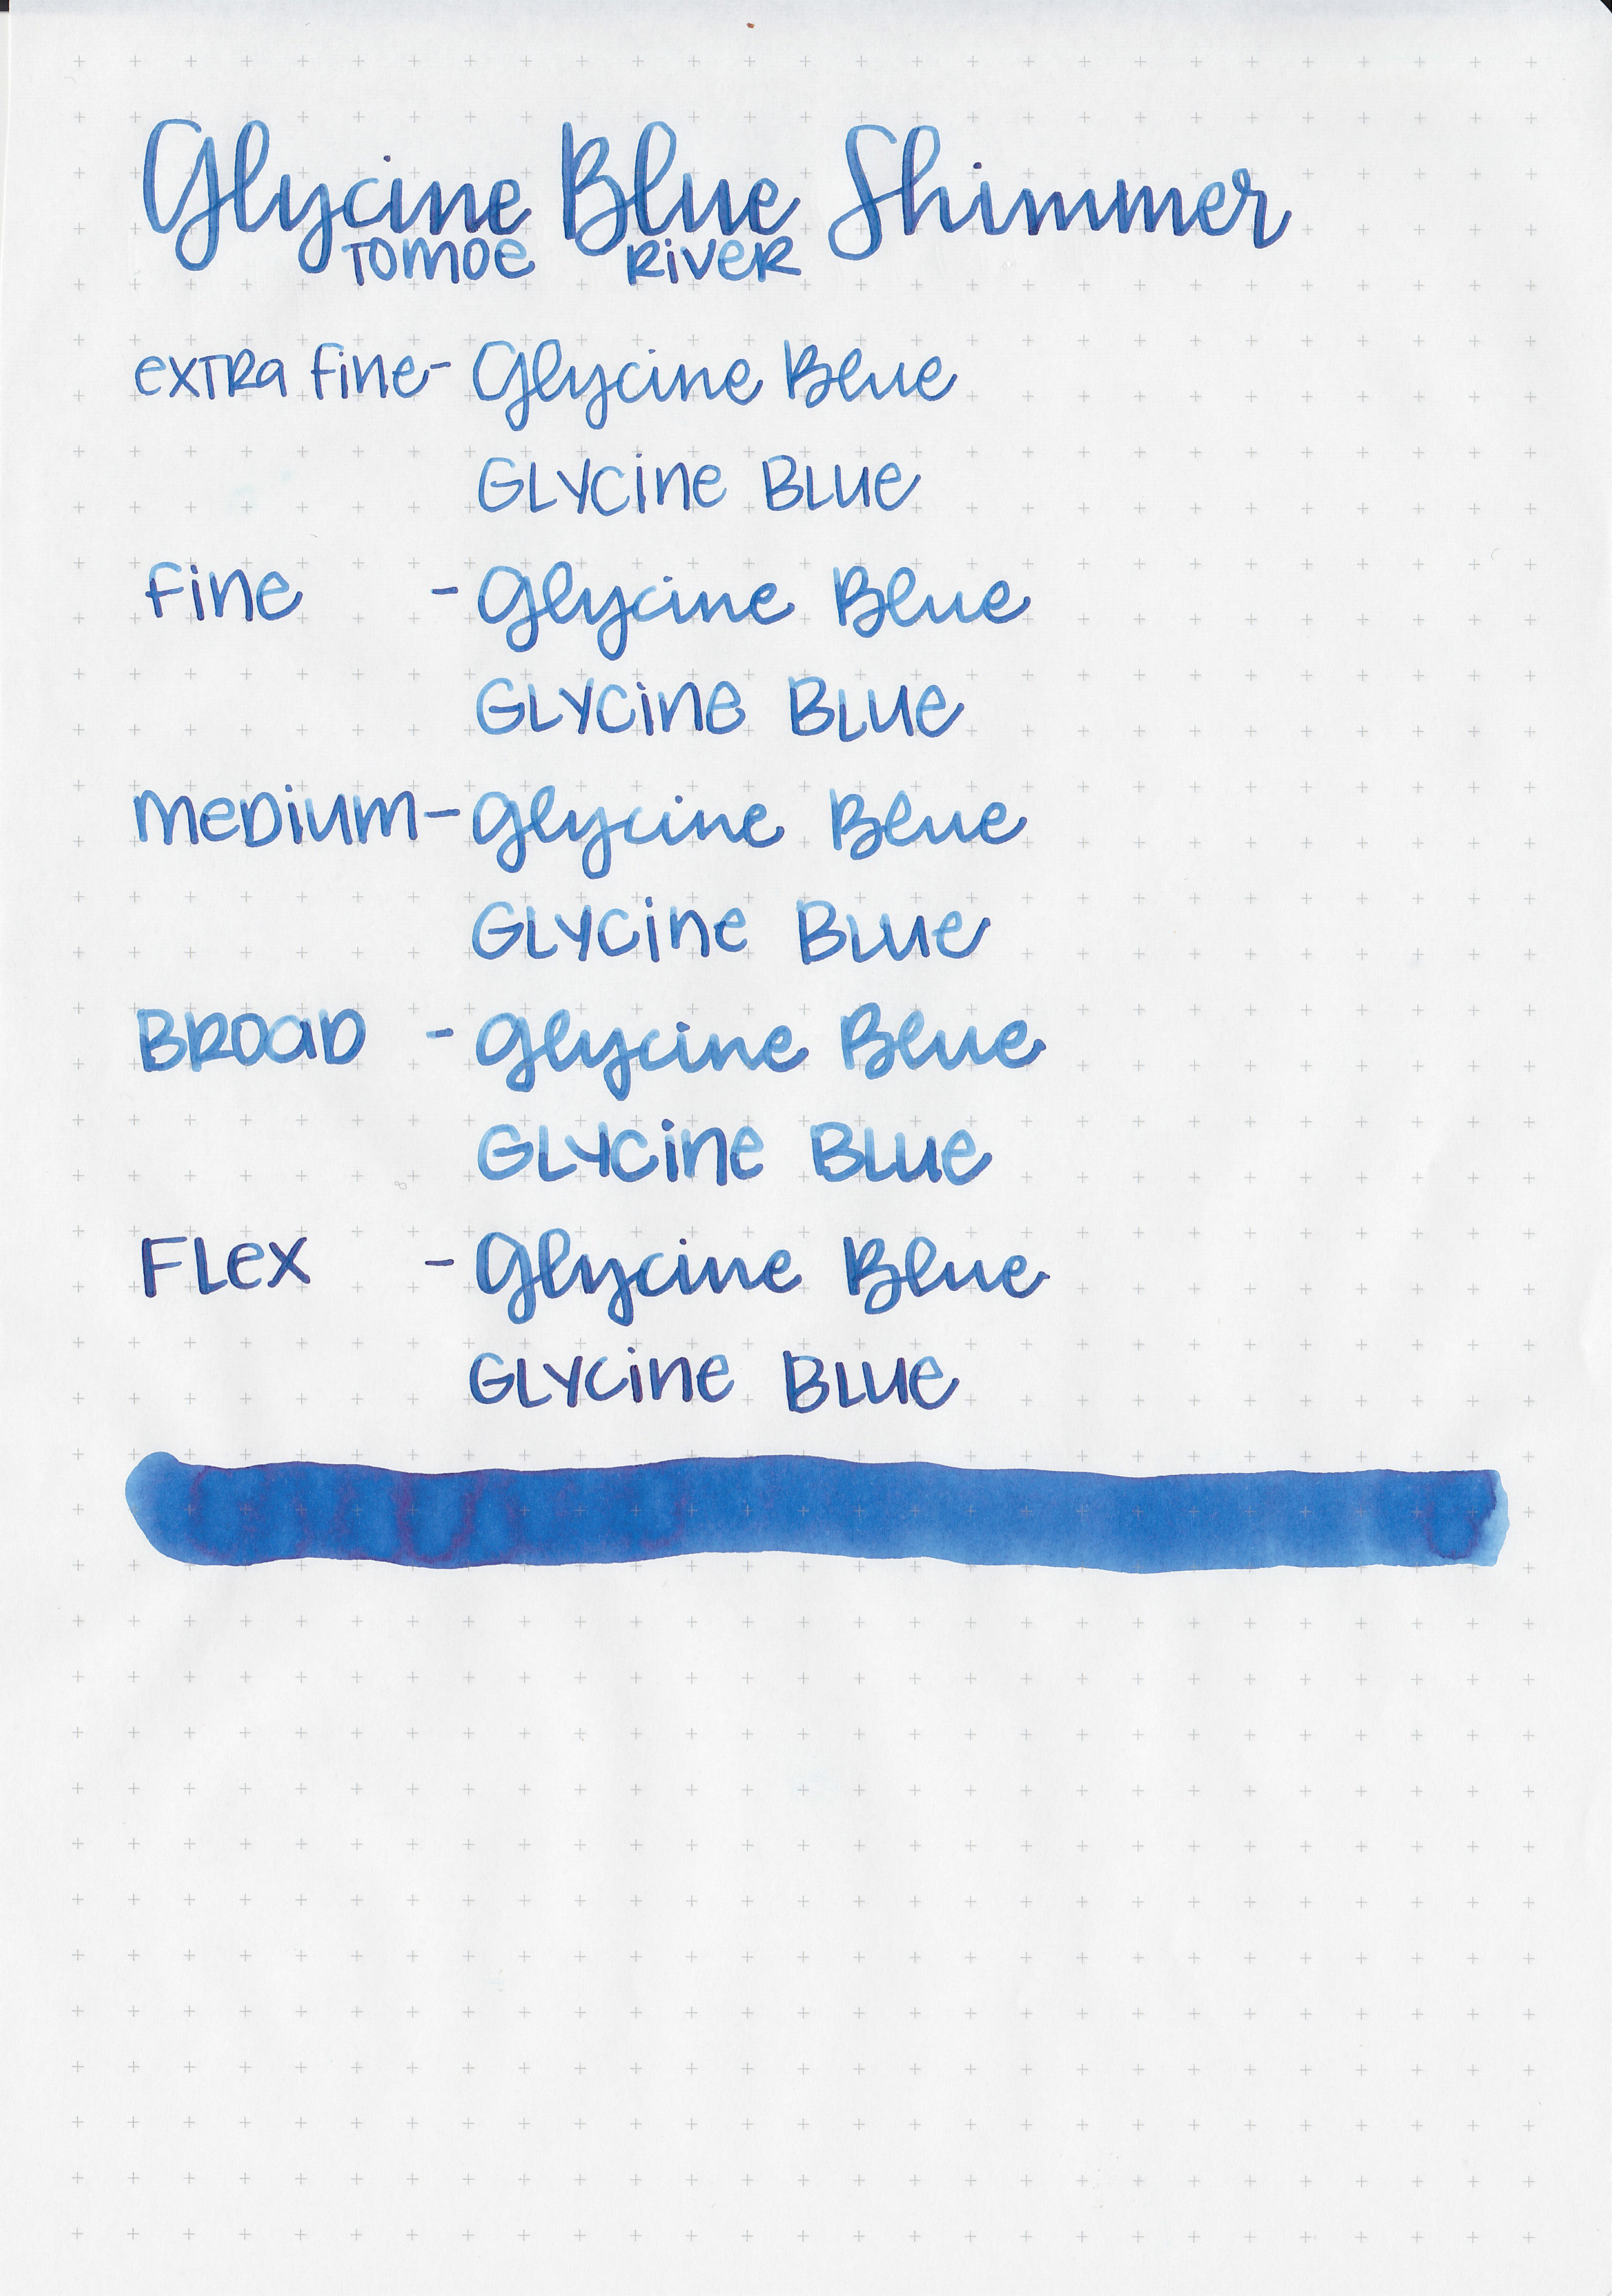 os-glycine-blue-7.jpg